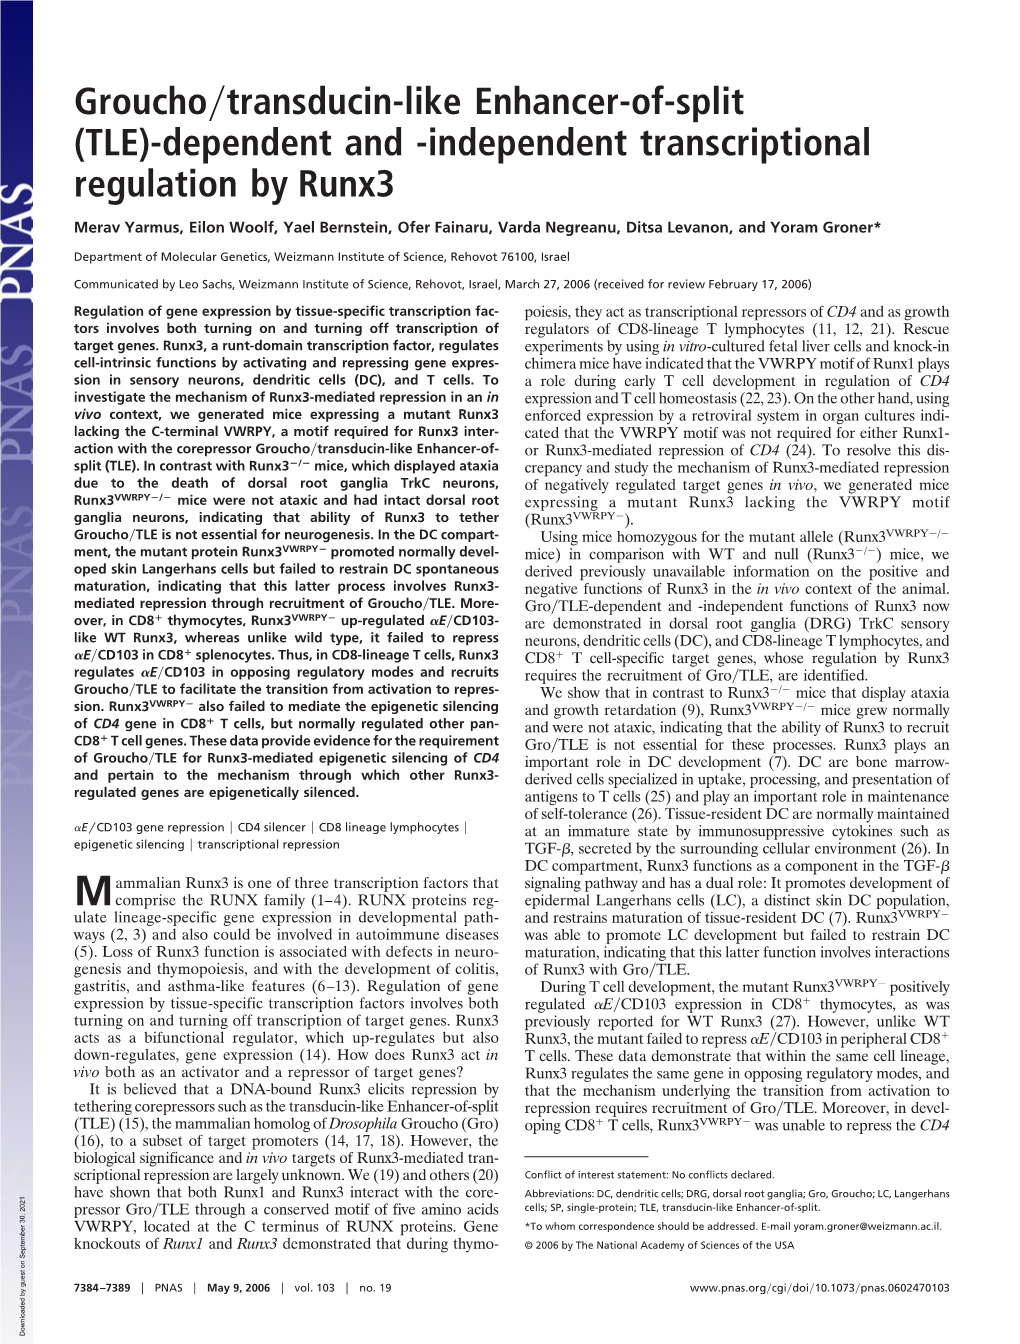 Independent Transcriptional Regulation by Runx3